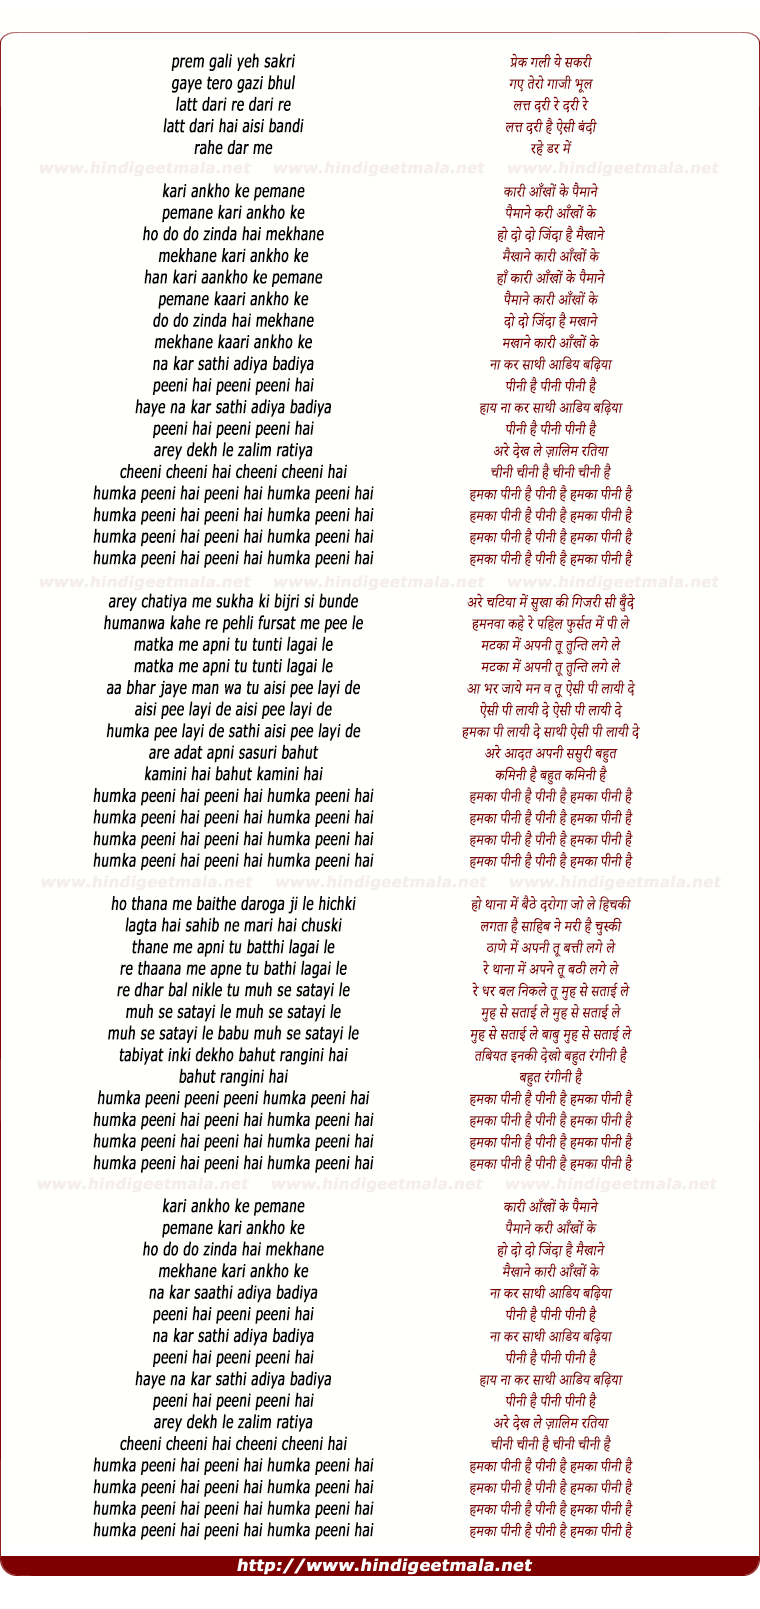 lyrics of song Humka Peeni Hai Peeni Hai Humka Peeni Hai